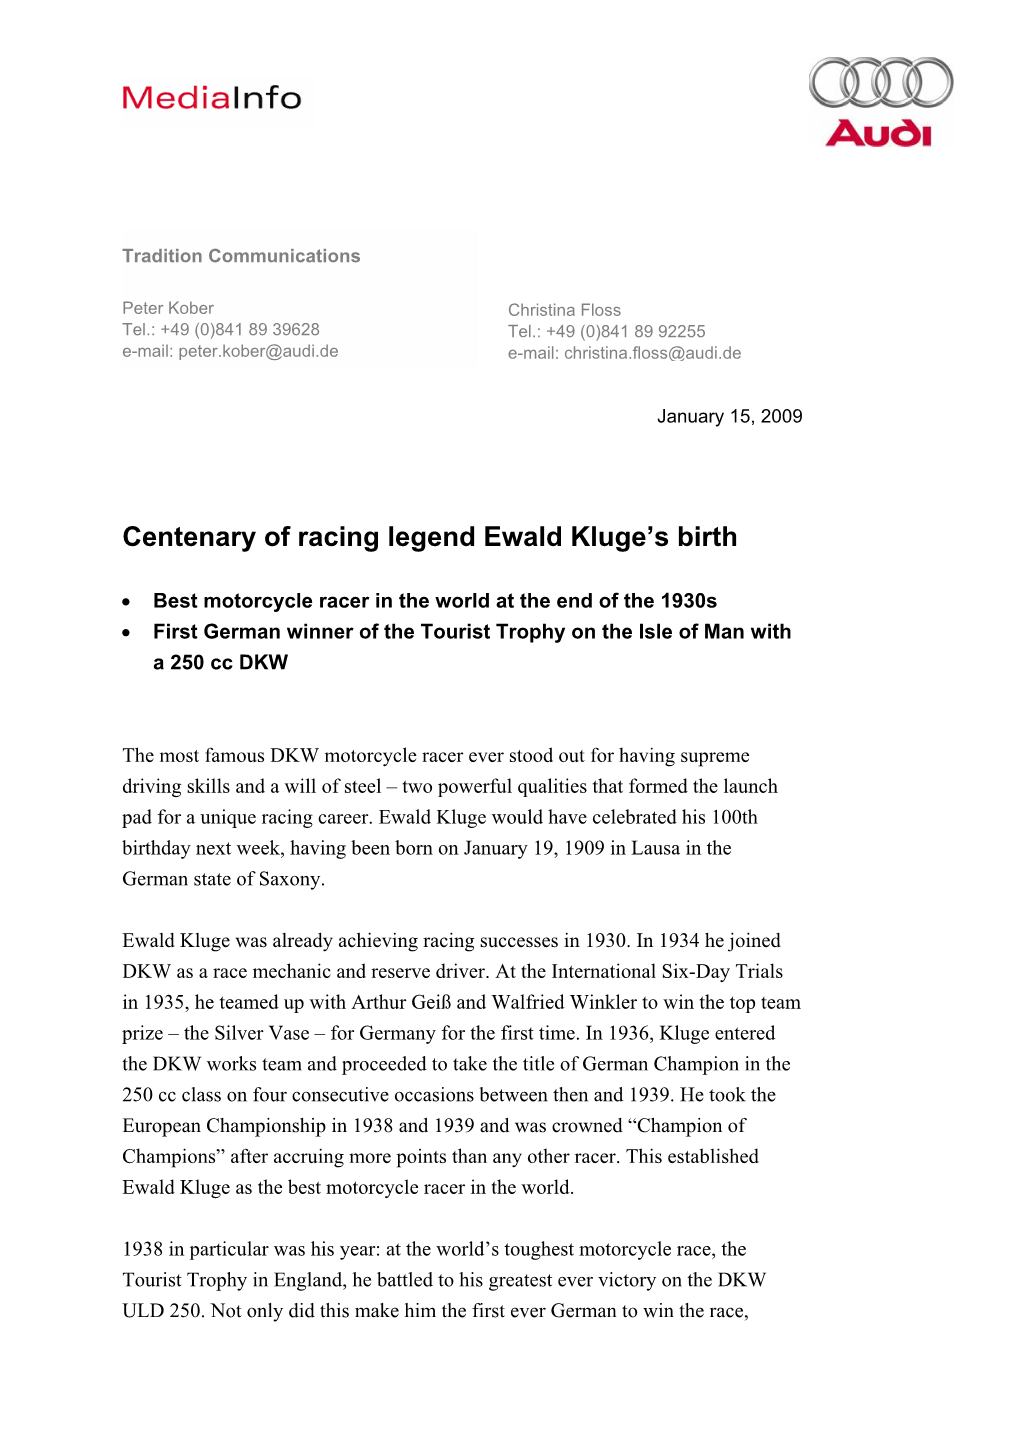 Centenary of Racing Legend Ewald Kluge's Birth